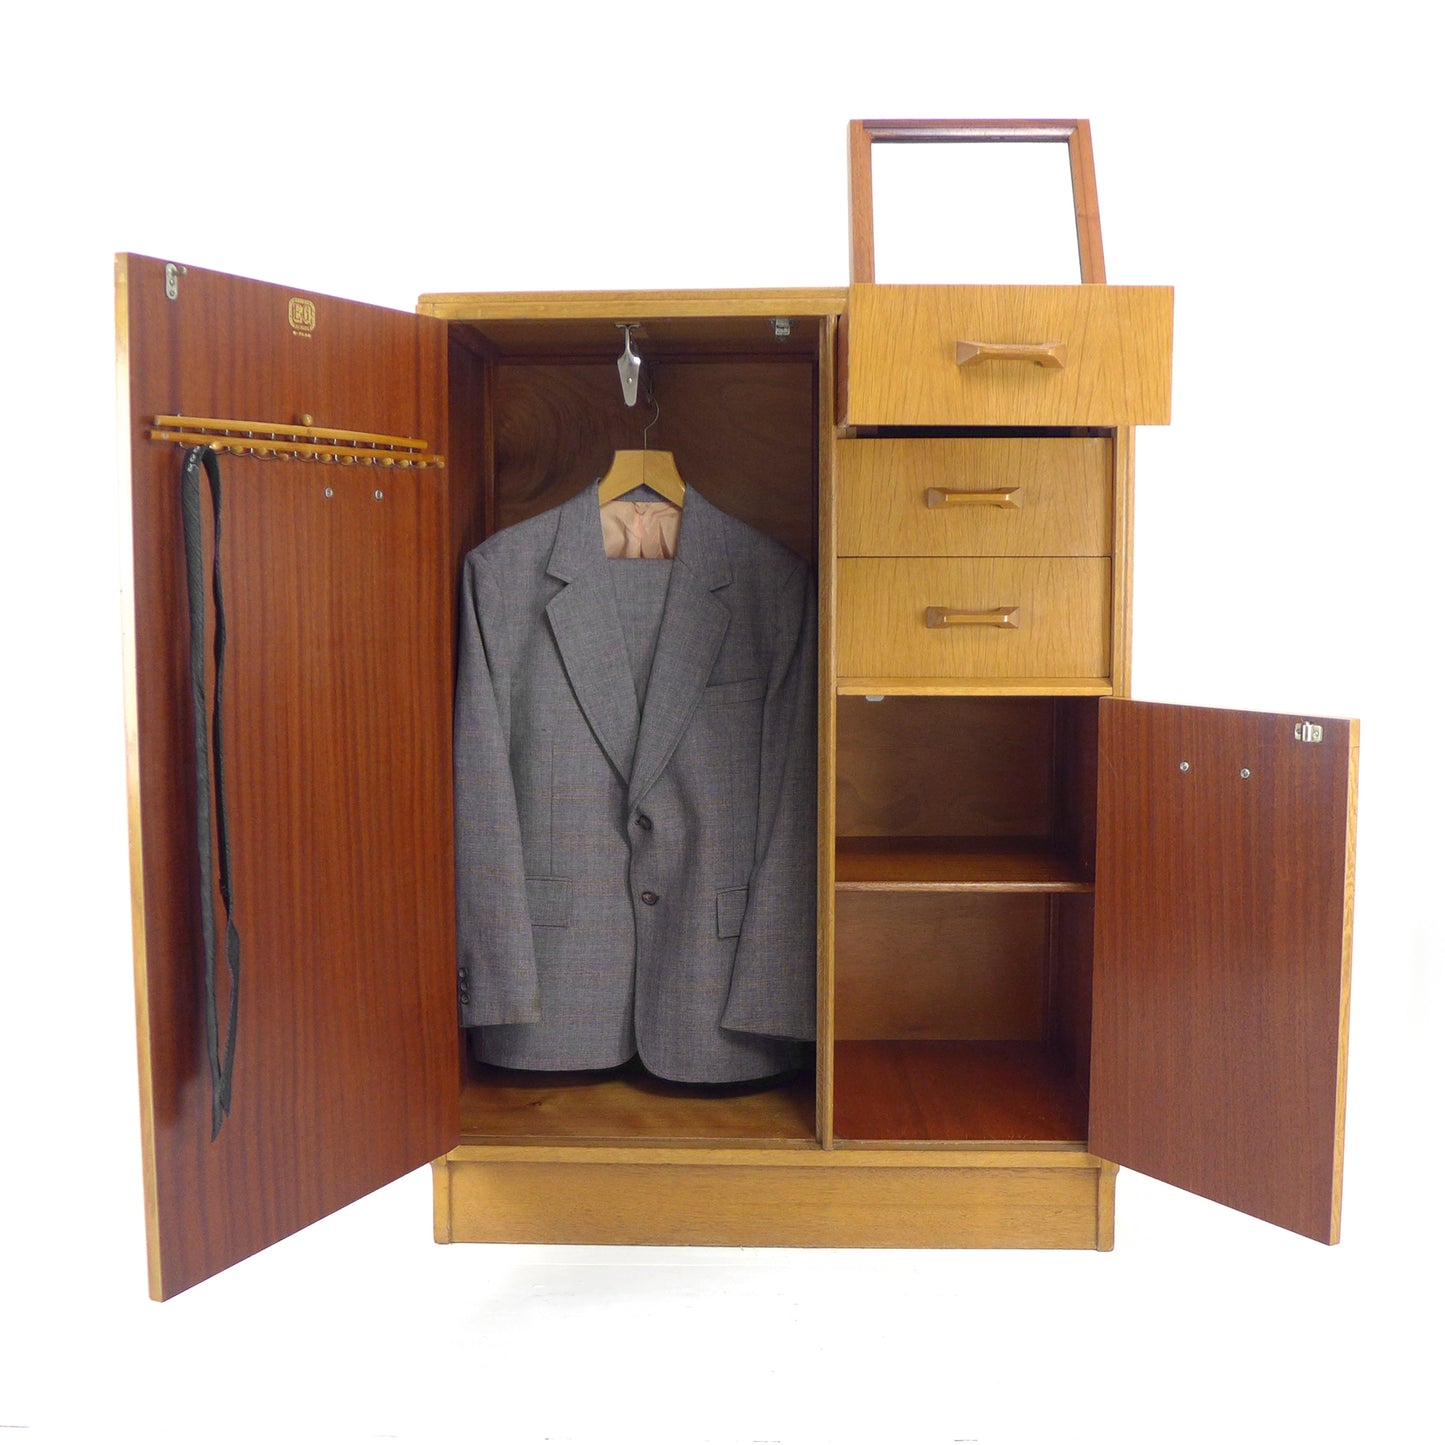 Vintage G PLAN Wardrobe - Gentleman's Tallboy with Drawers - Mid Century